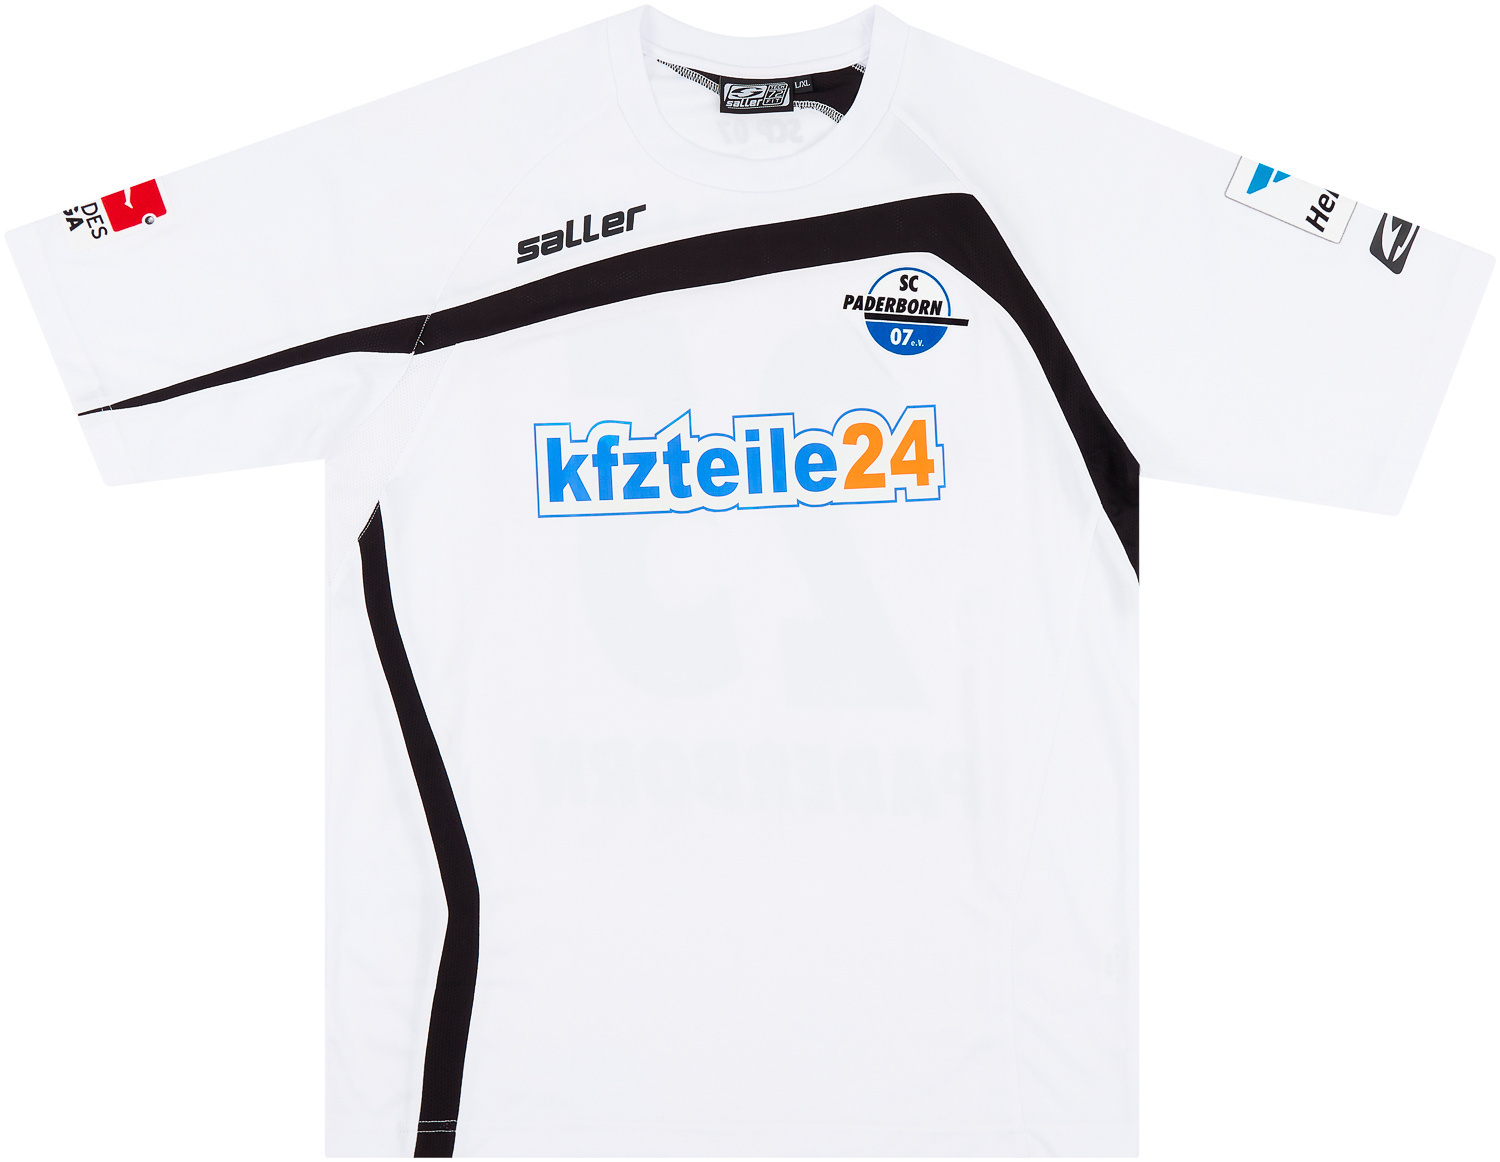 Retro Paderborn Shirt